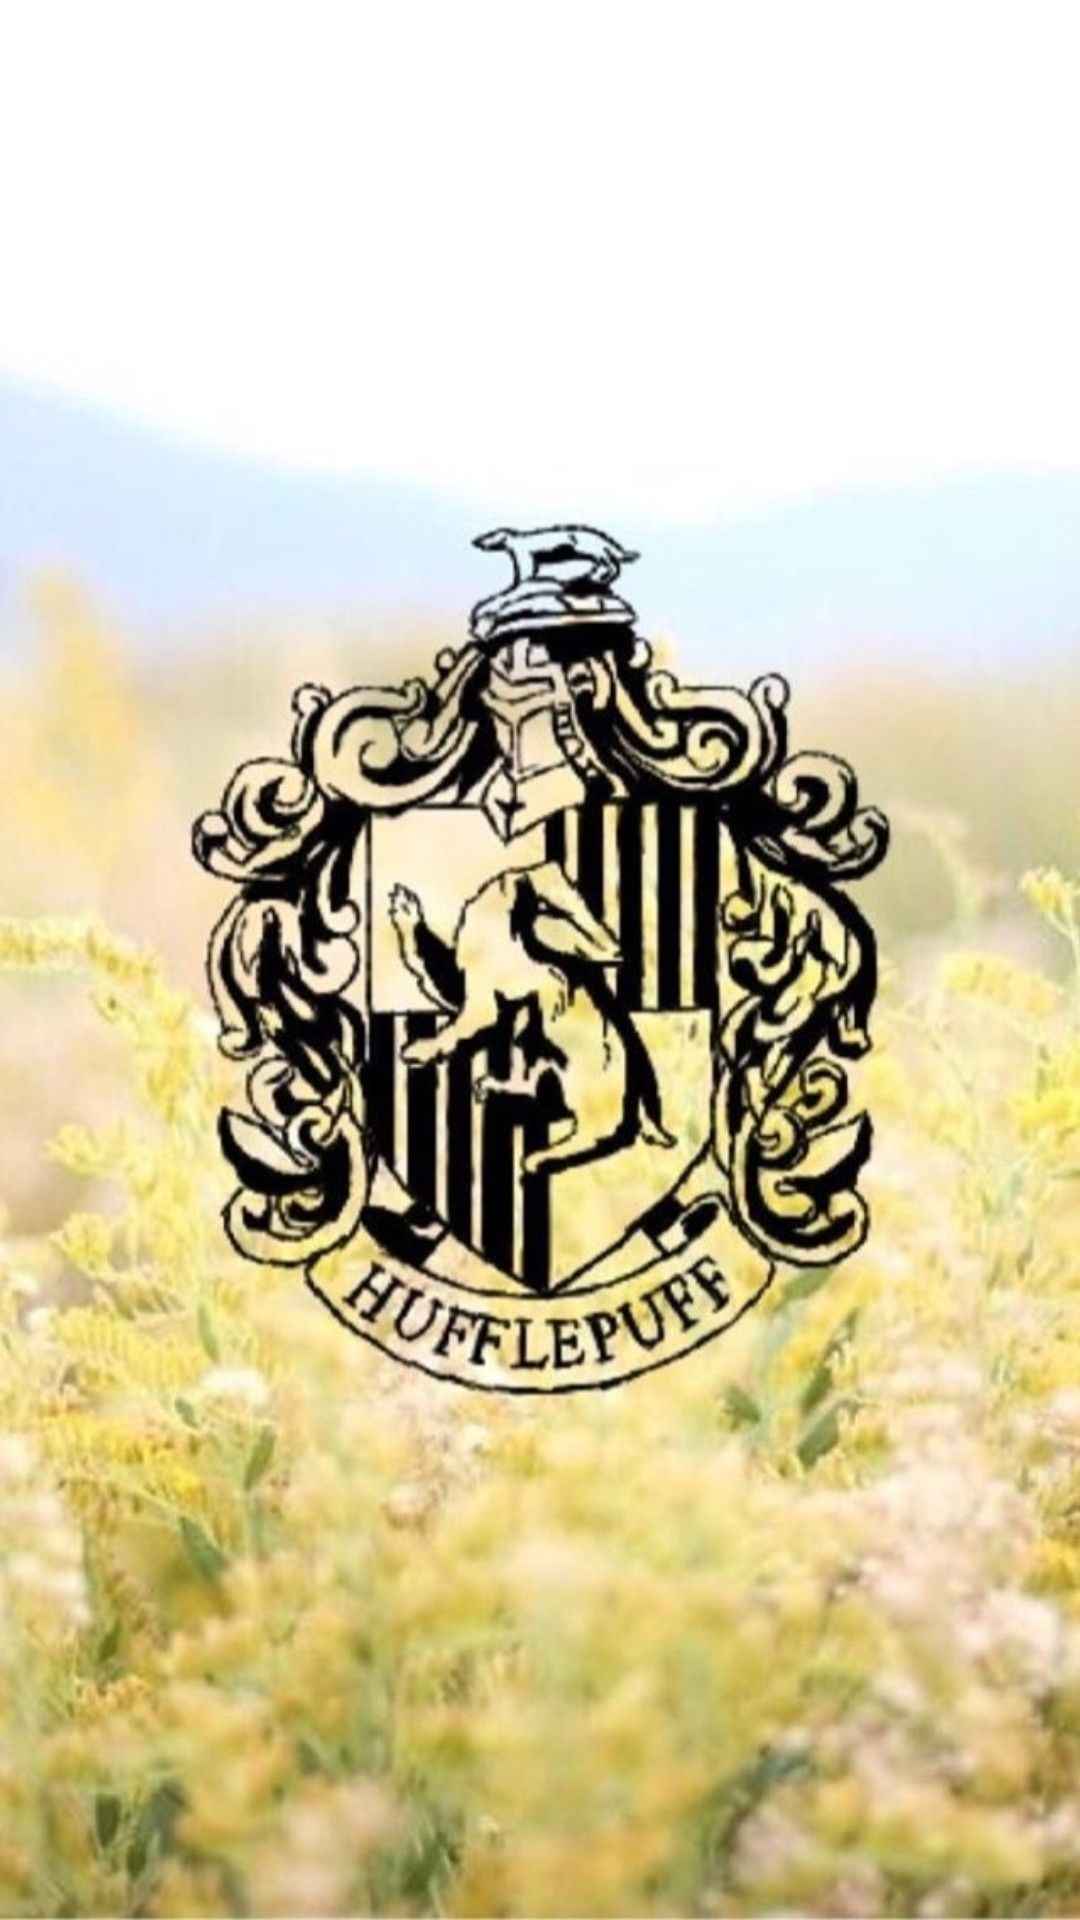 Hufflepuff loyalty, Hogwarts house, Movie fan art, Yellow crest, 1080x1920 Full HD Phone